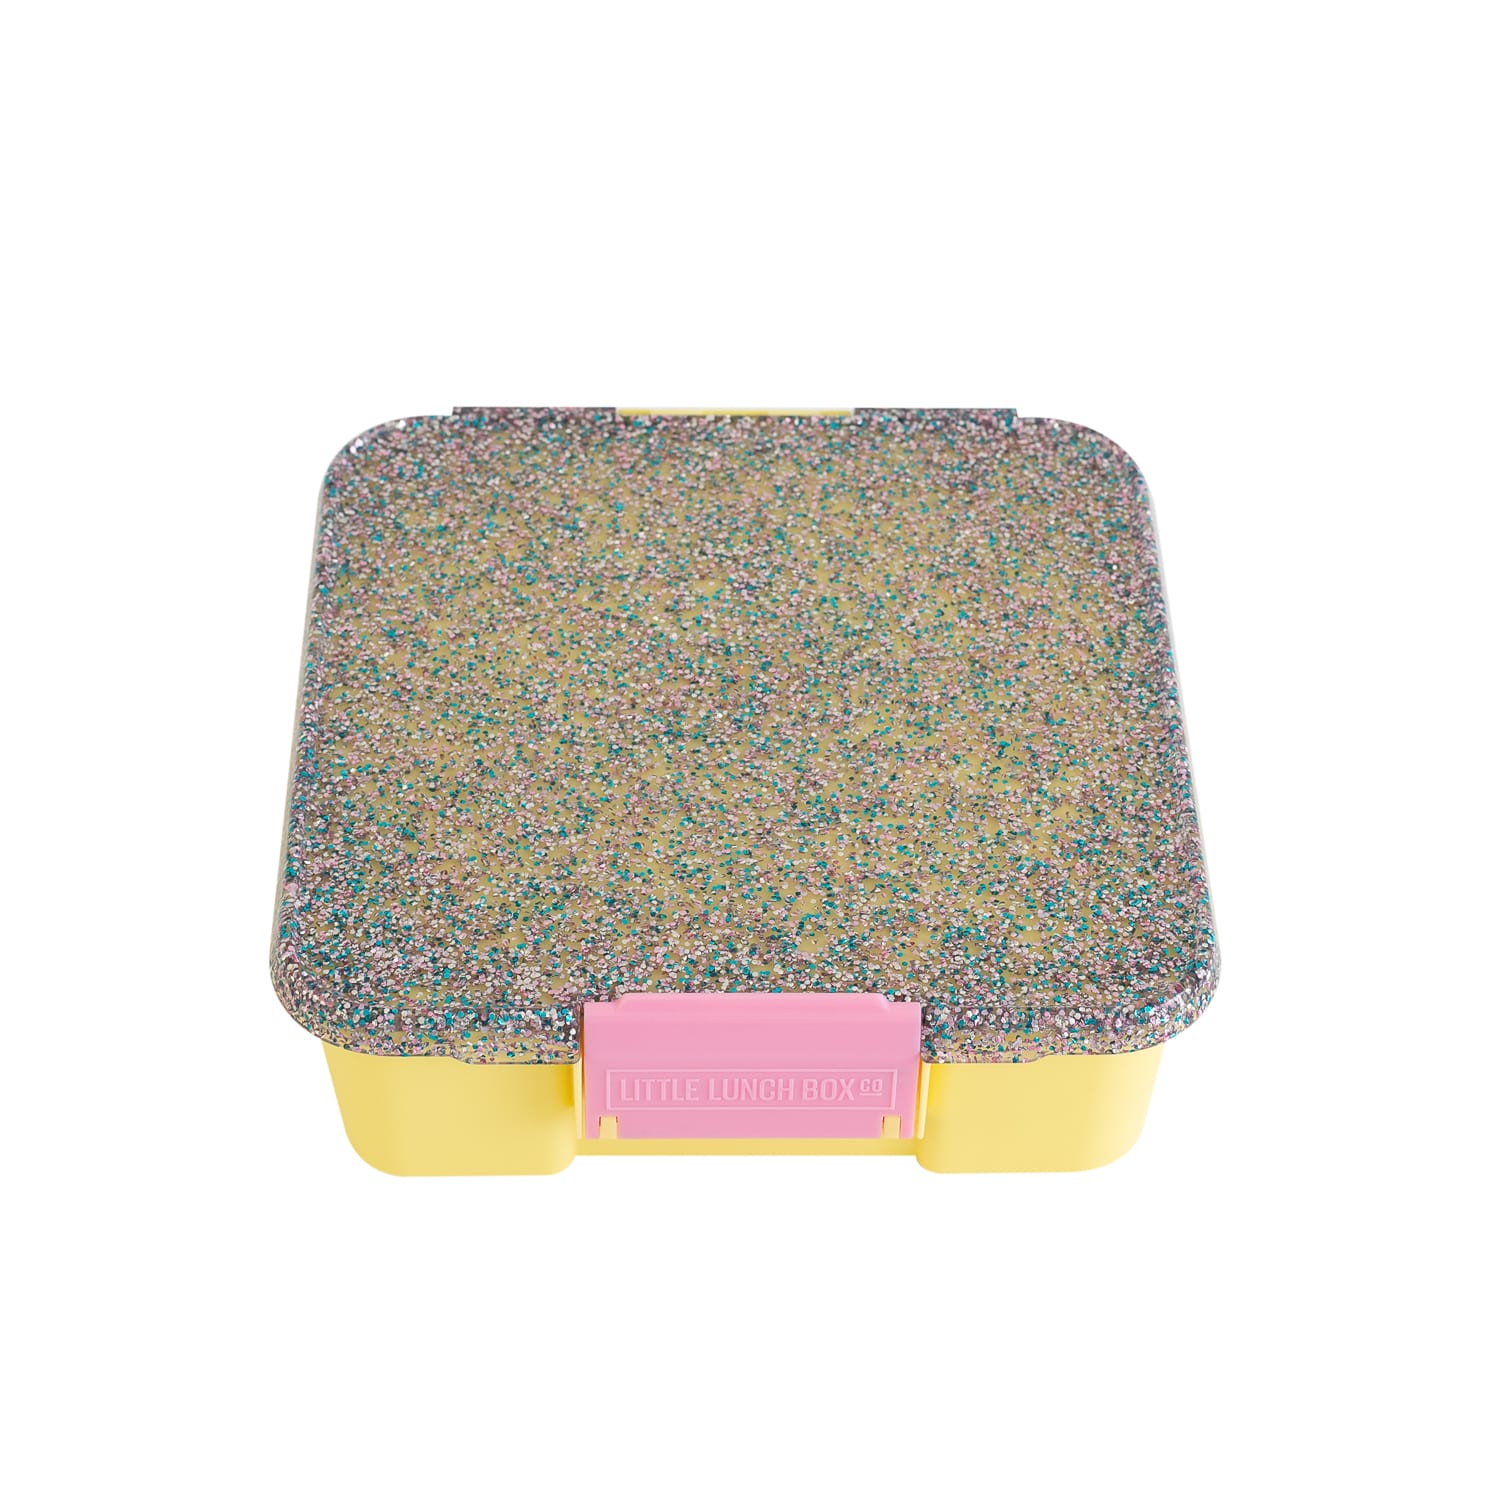 Little Lunch Box Co – Bento 5 Glitter